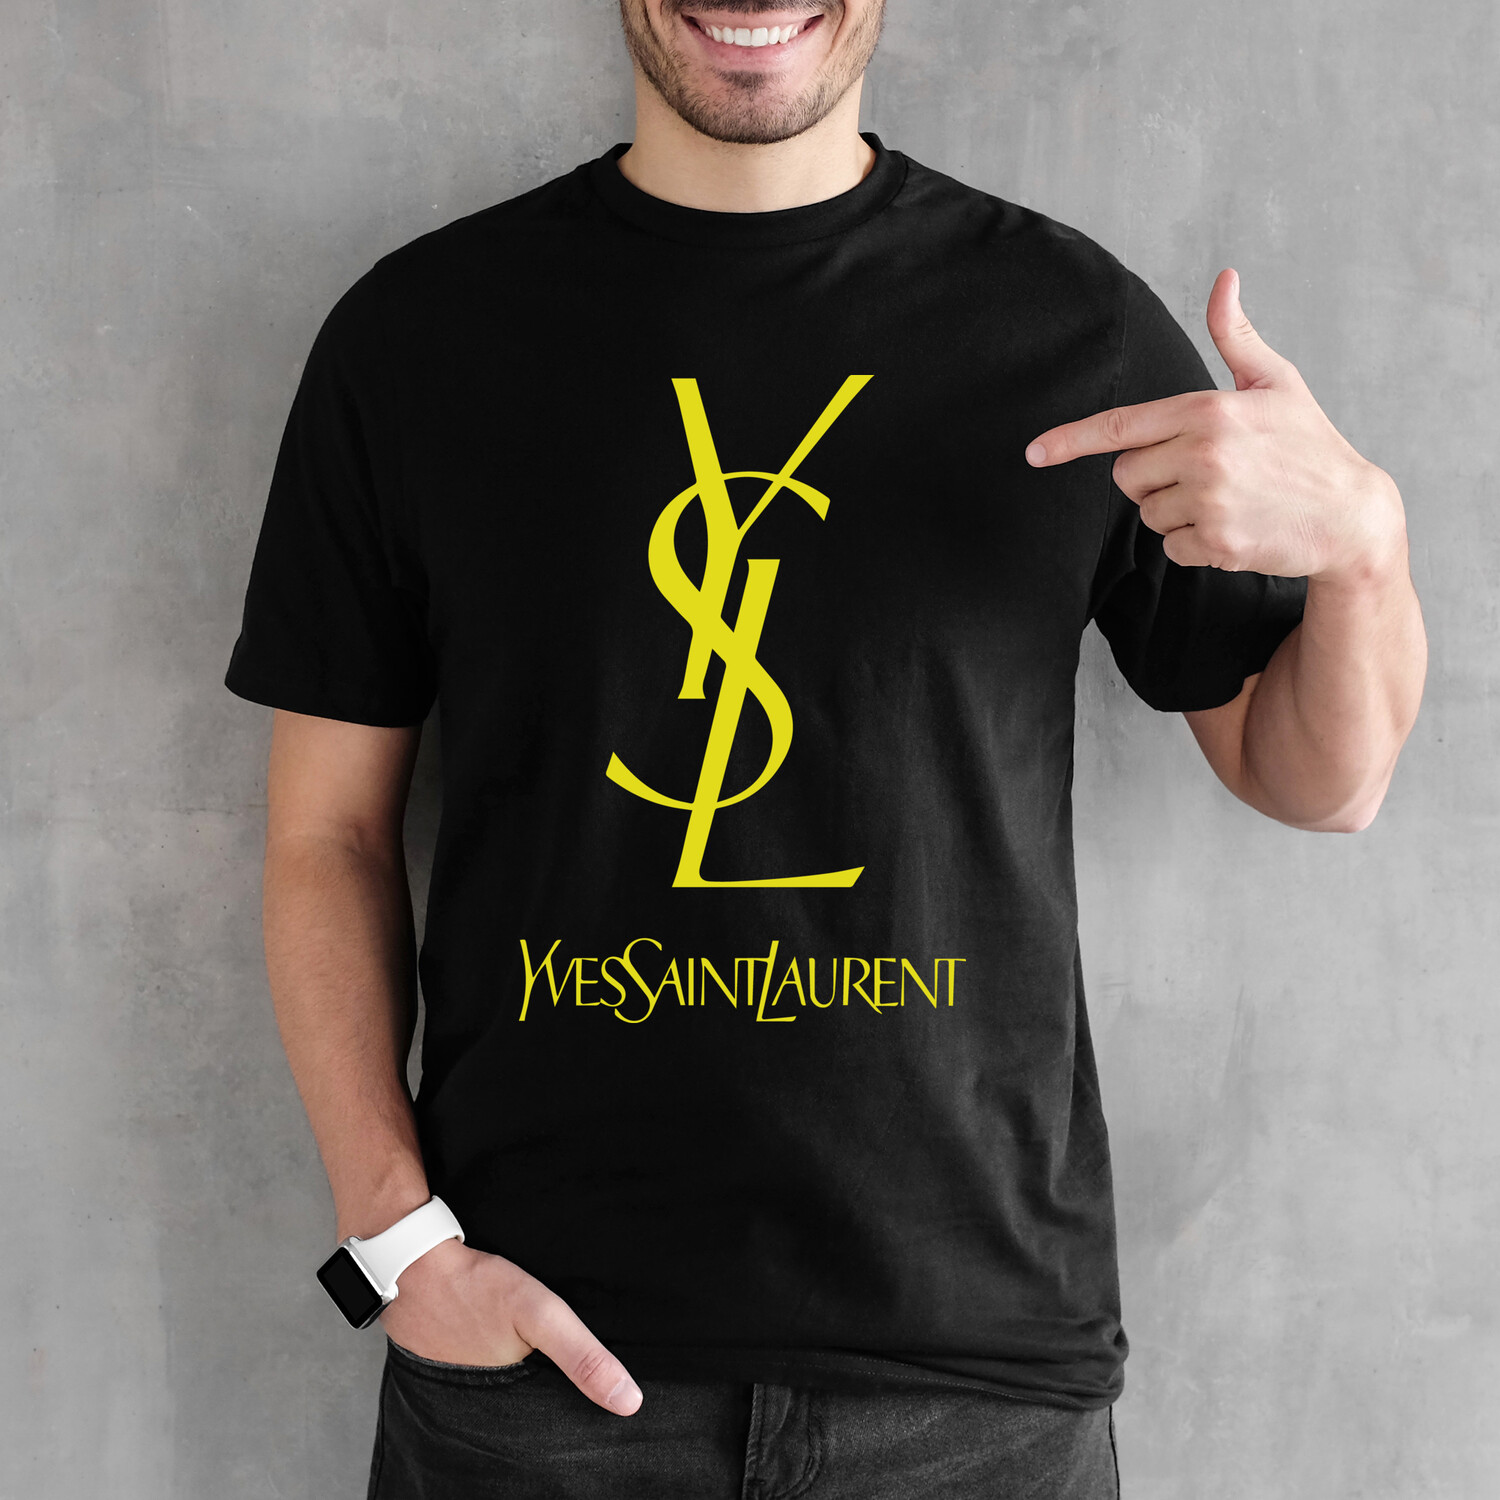 ysl logo shirt